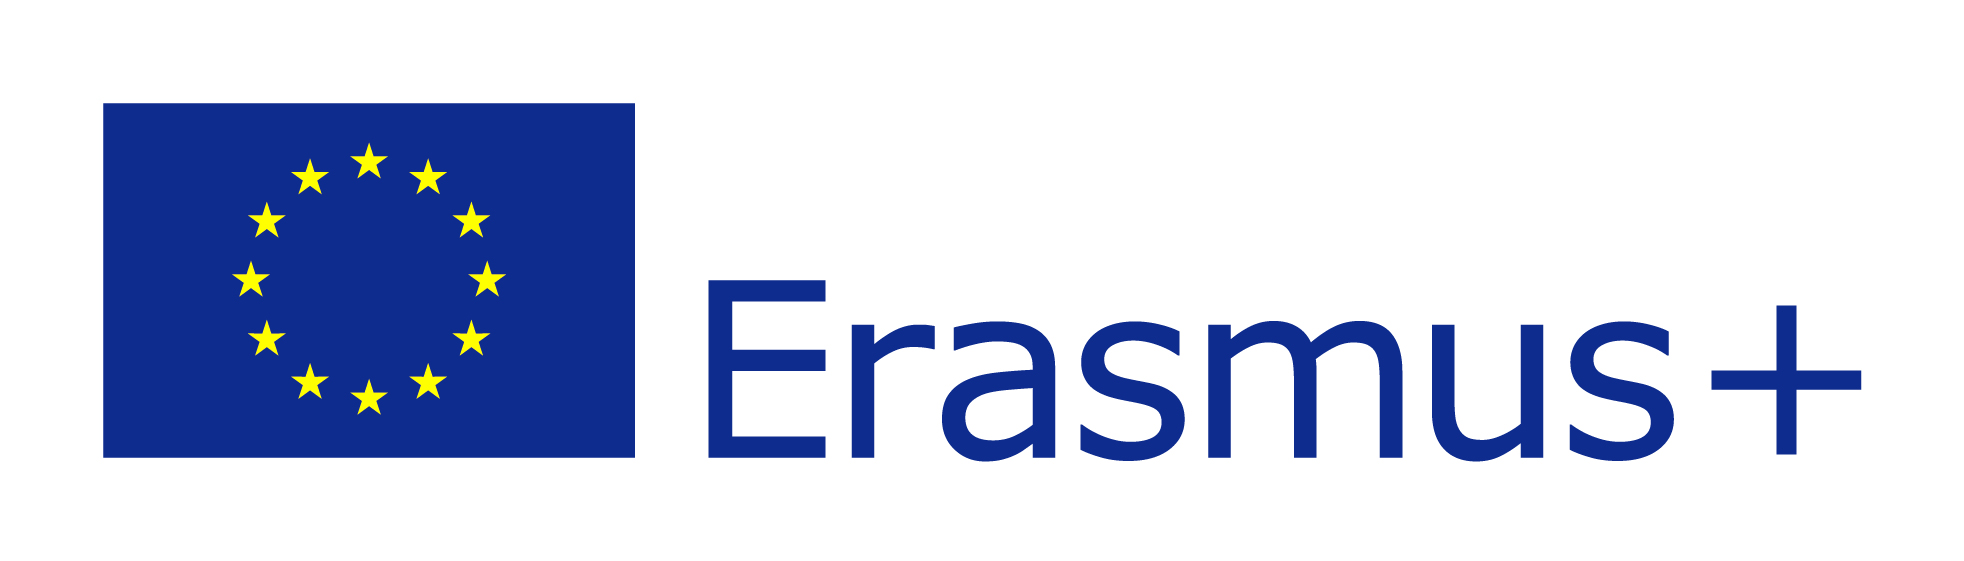 EU flag-Erasmus+_vect_POS.jpg (Print)